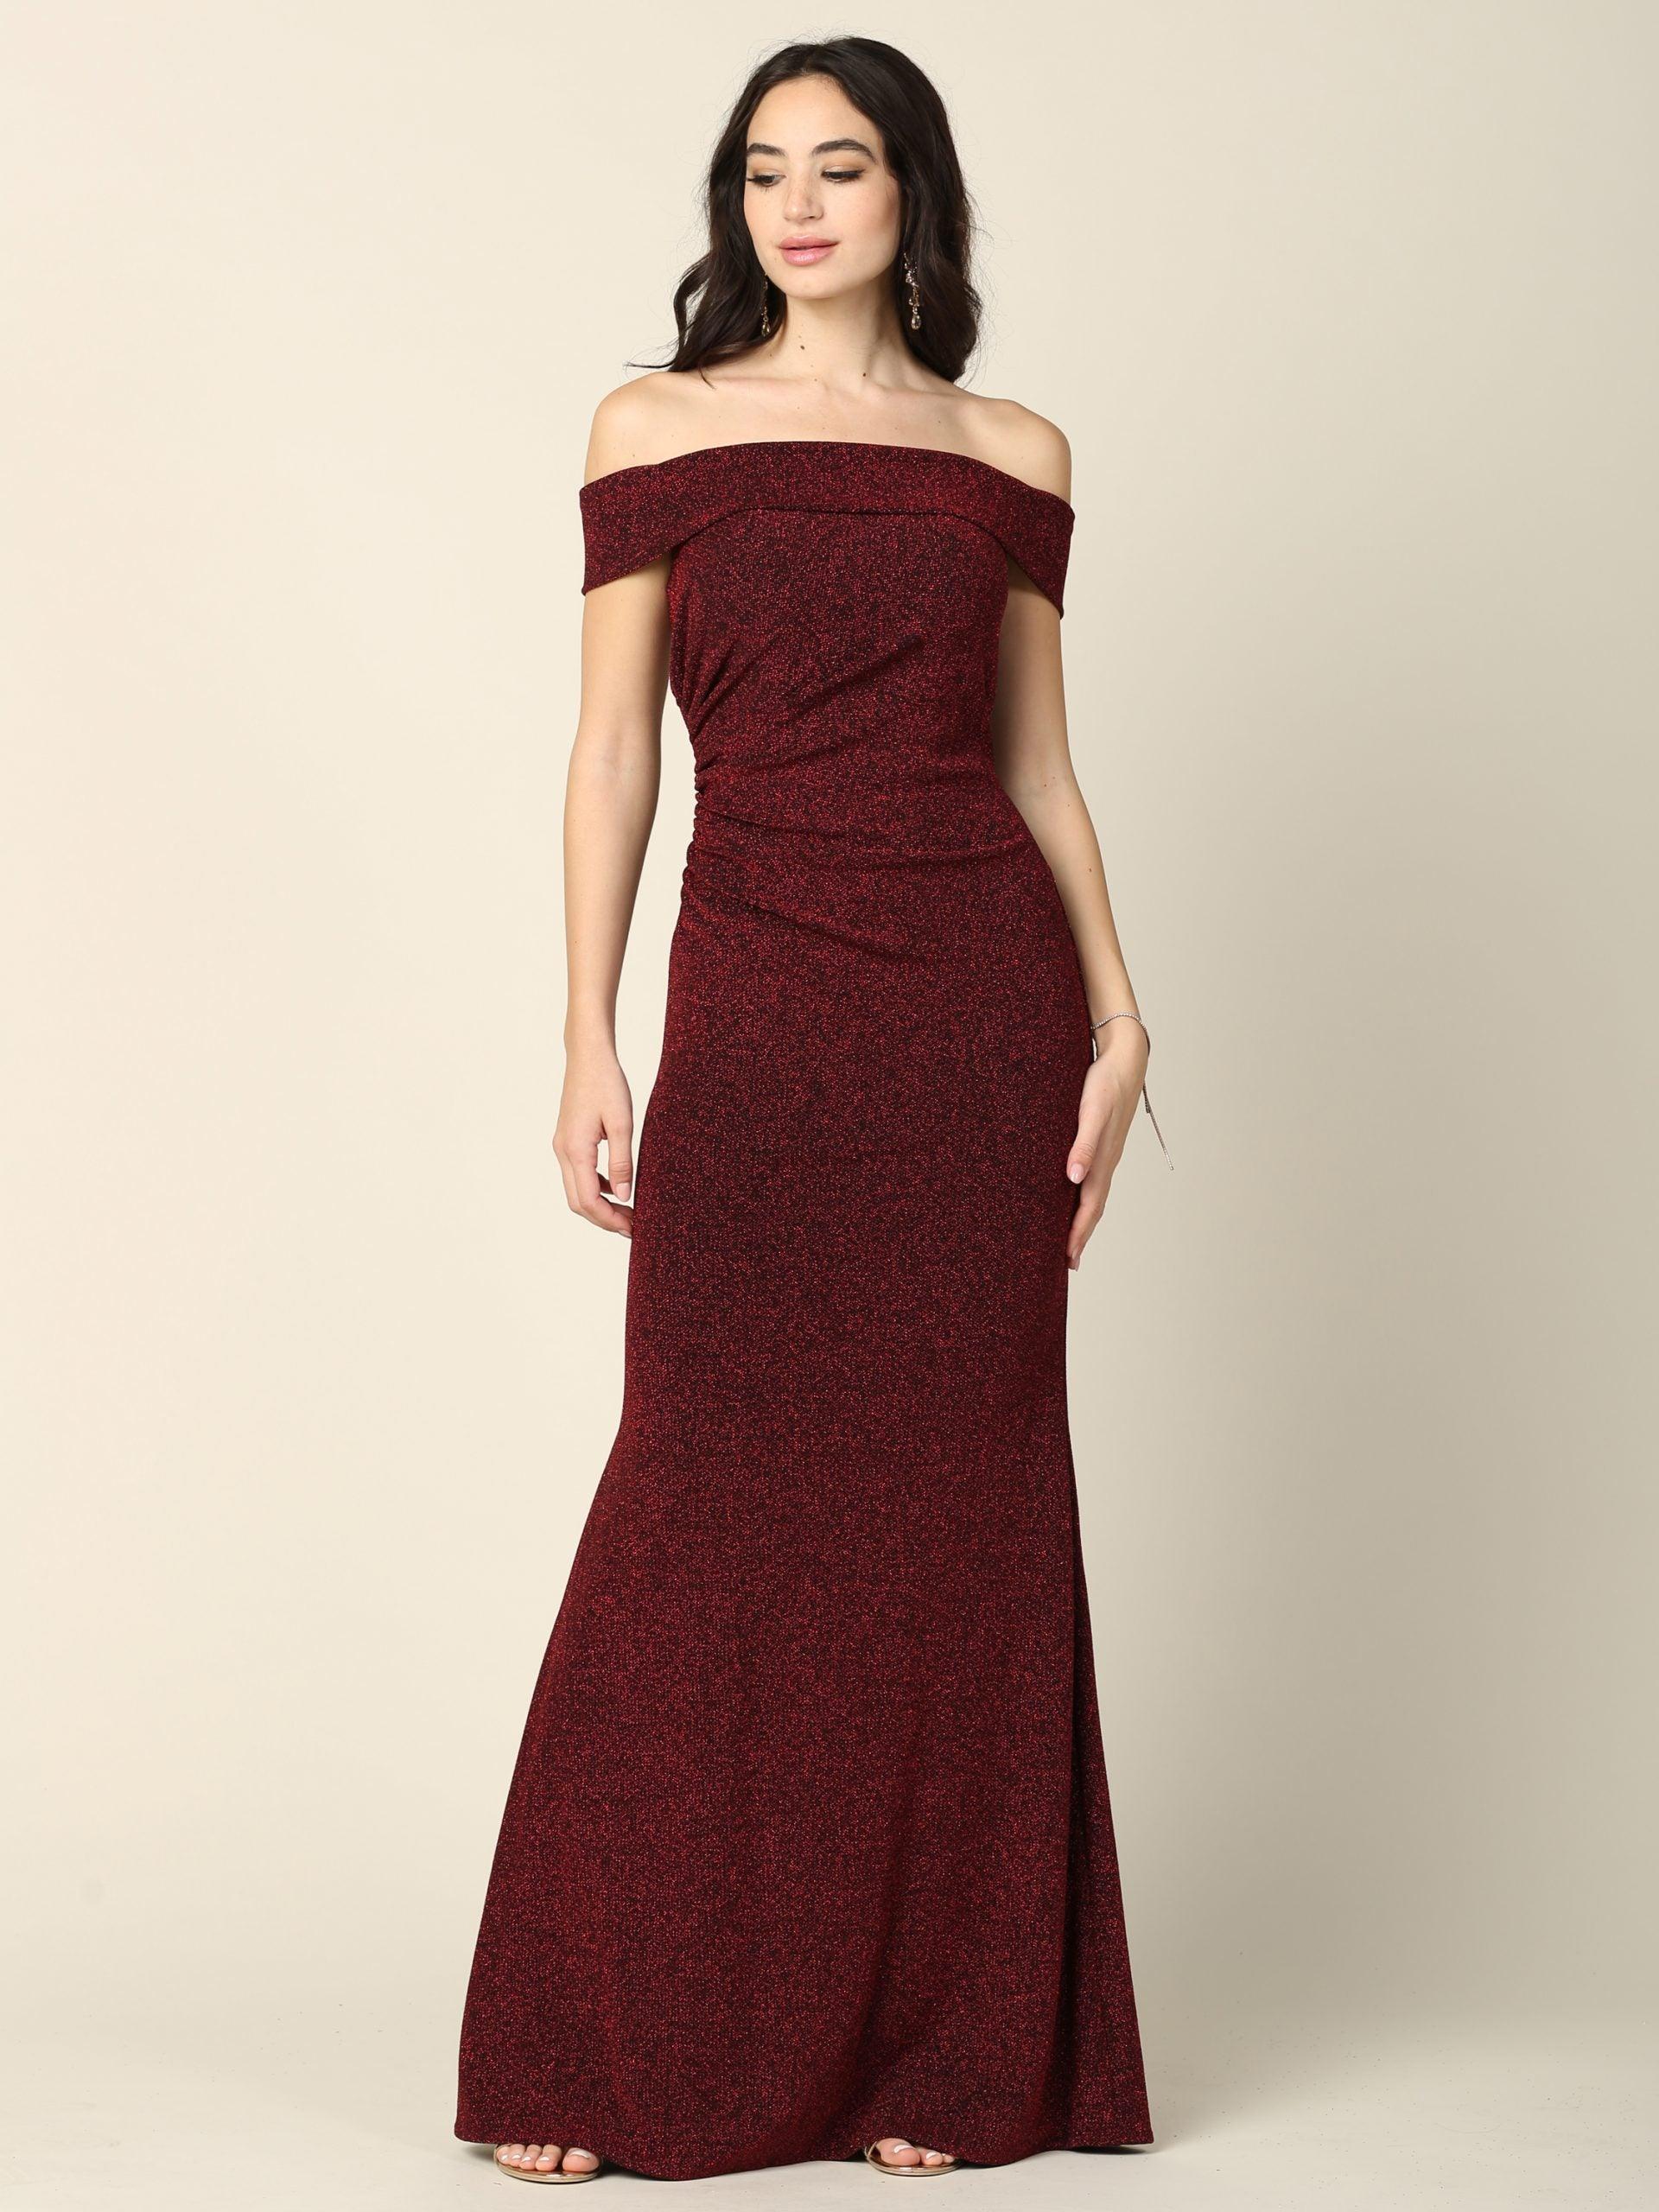 Long Off Shoulder Metallic Fitted Formal Dress - The Dress Outlet